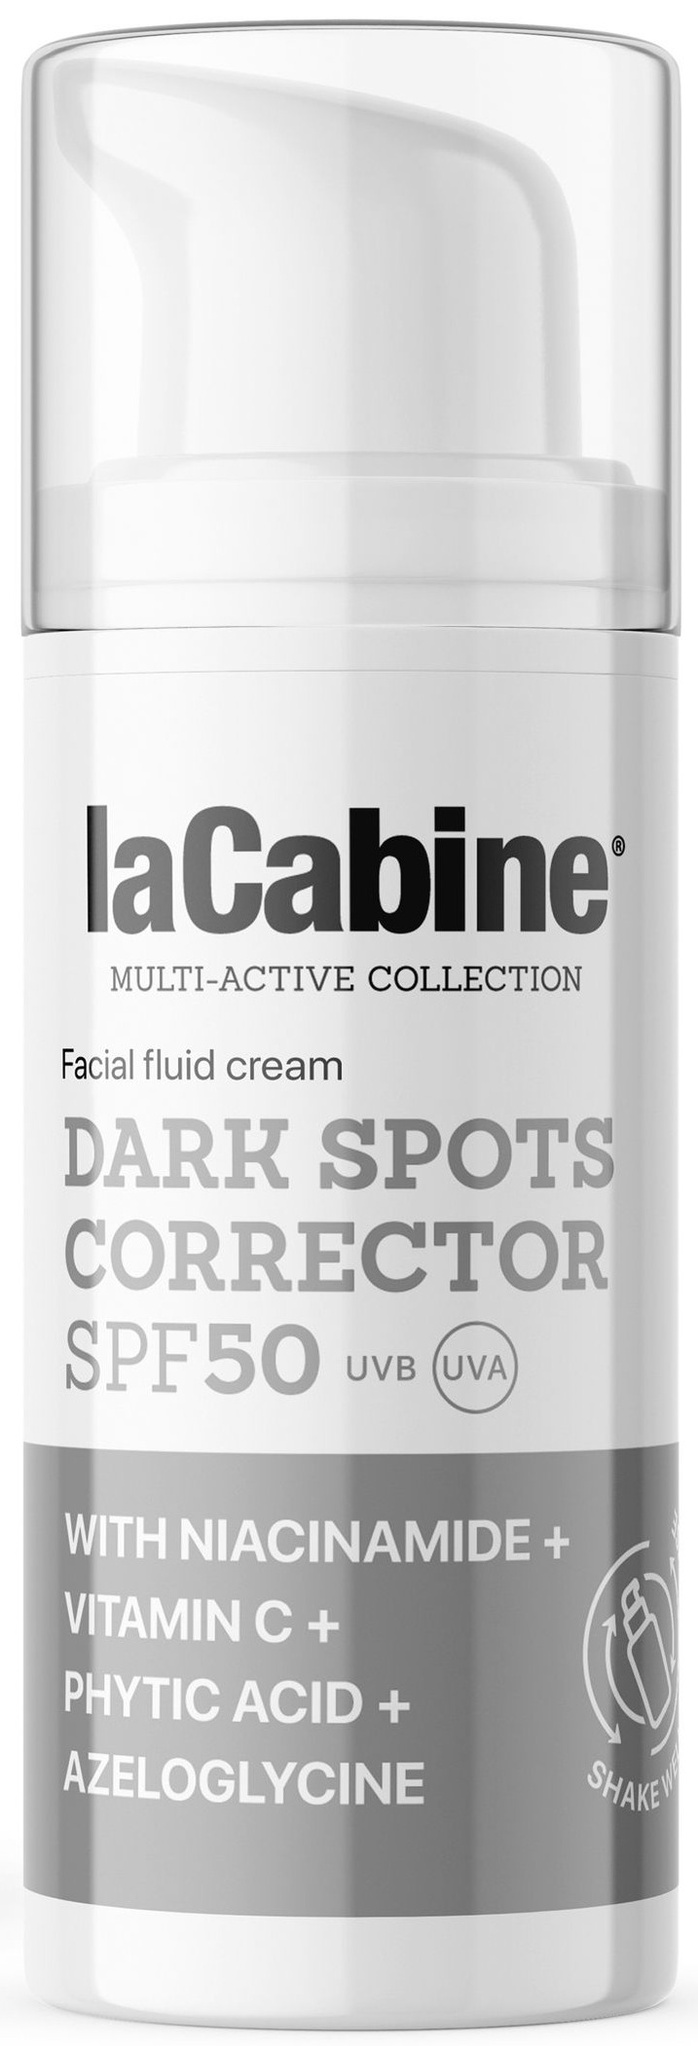 LaCabine Dark Spots Corrector SPF50